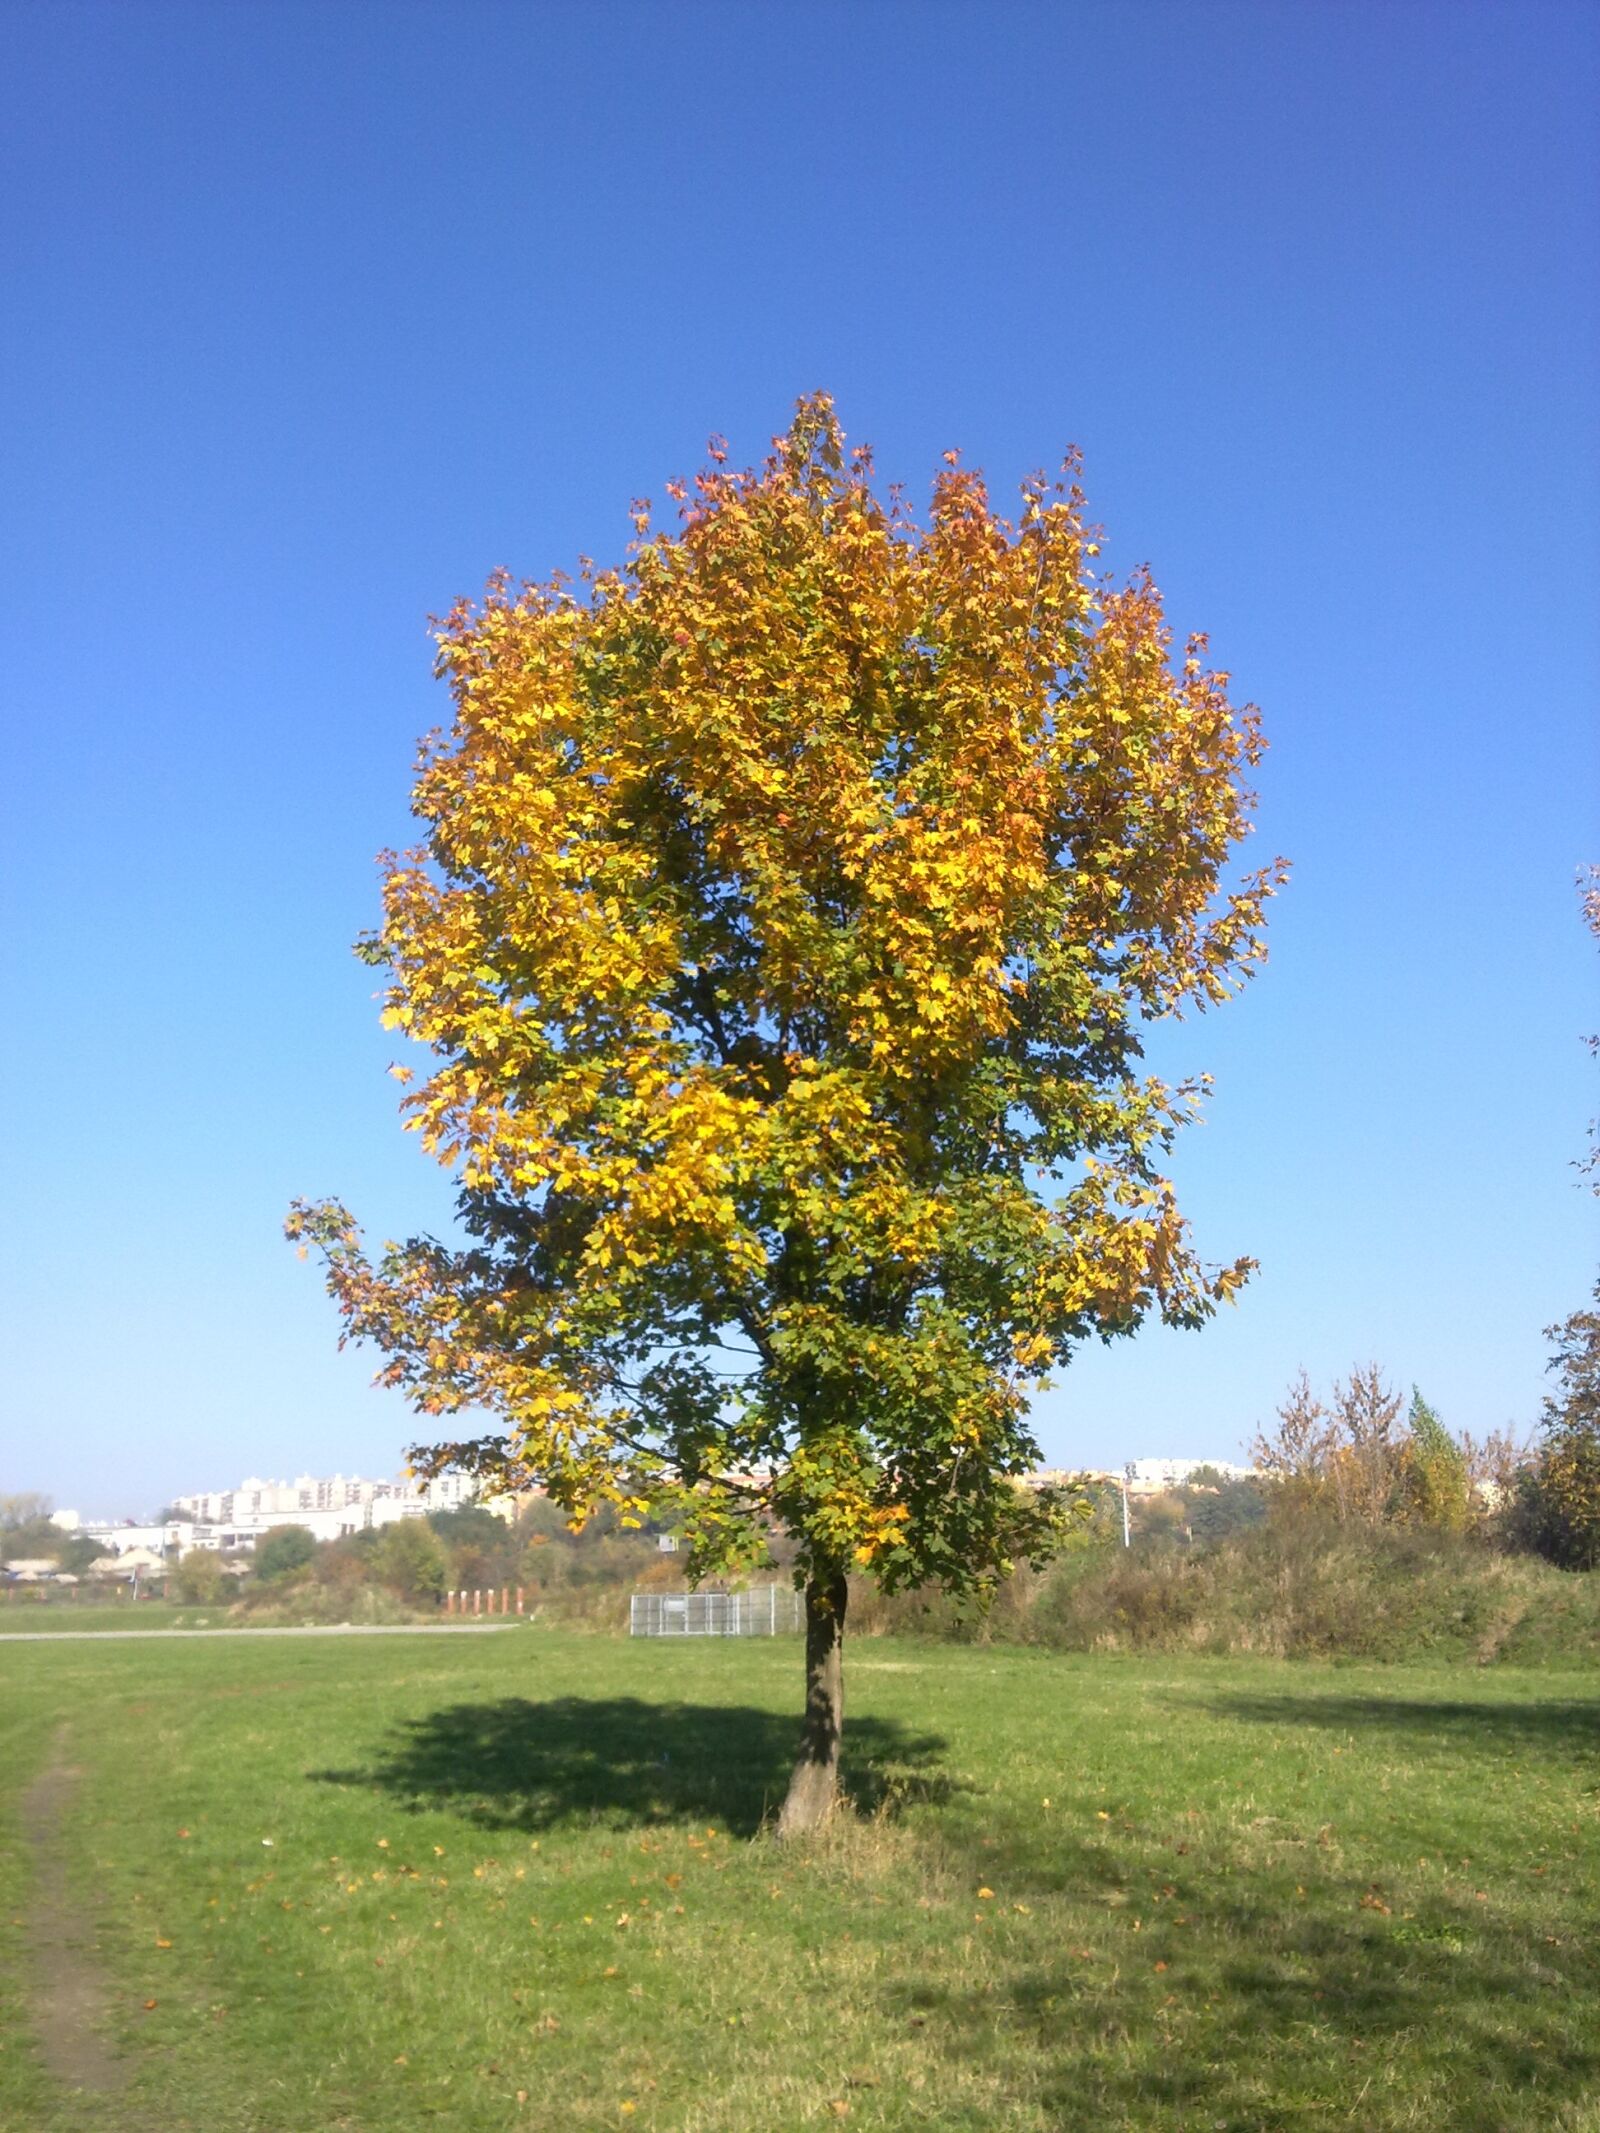 Nokia C6-00 sample photo. Tree, sky, autumn photography